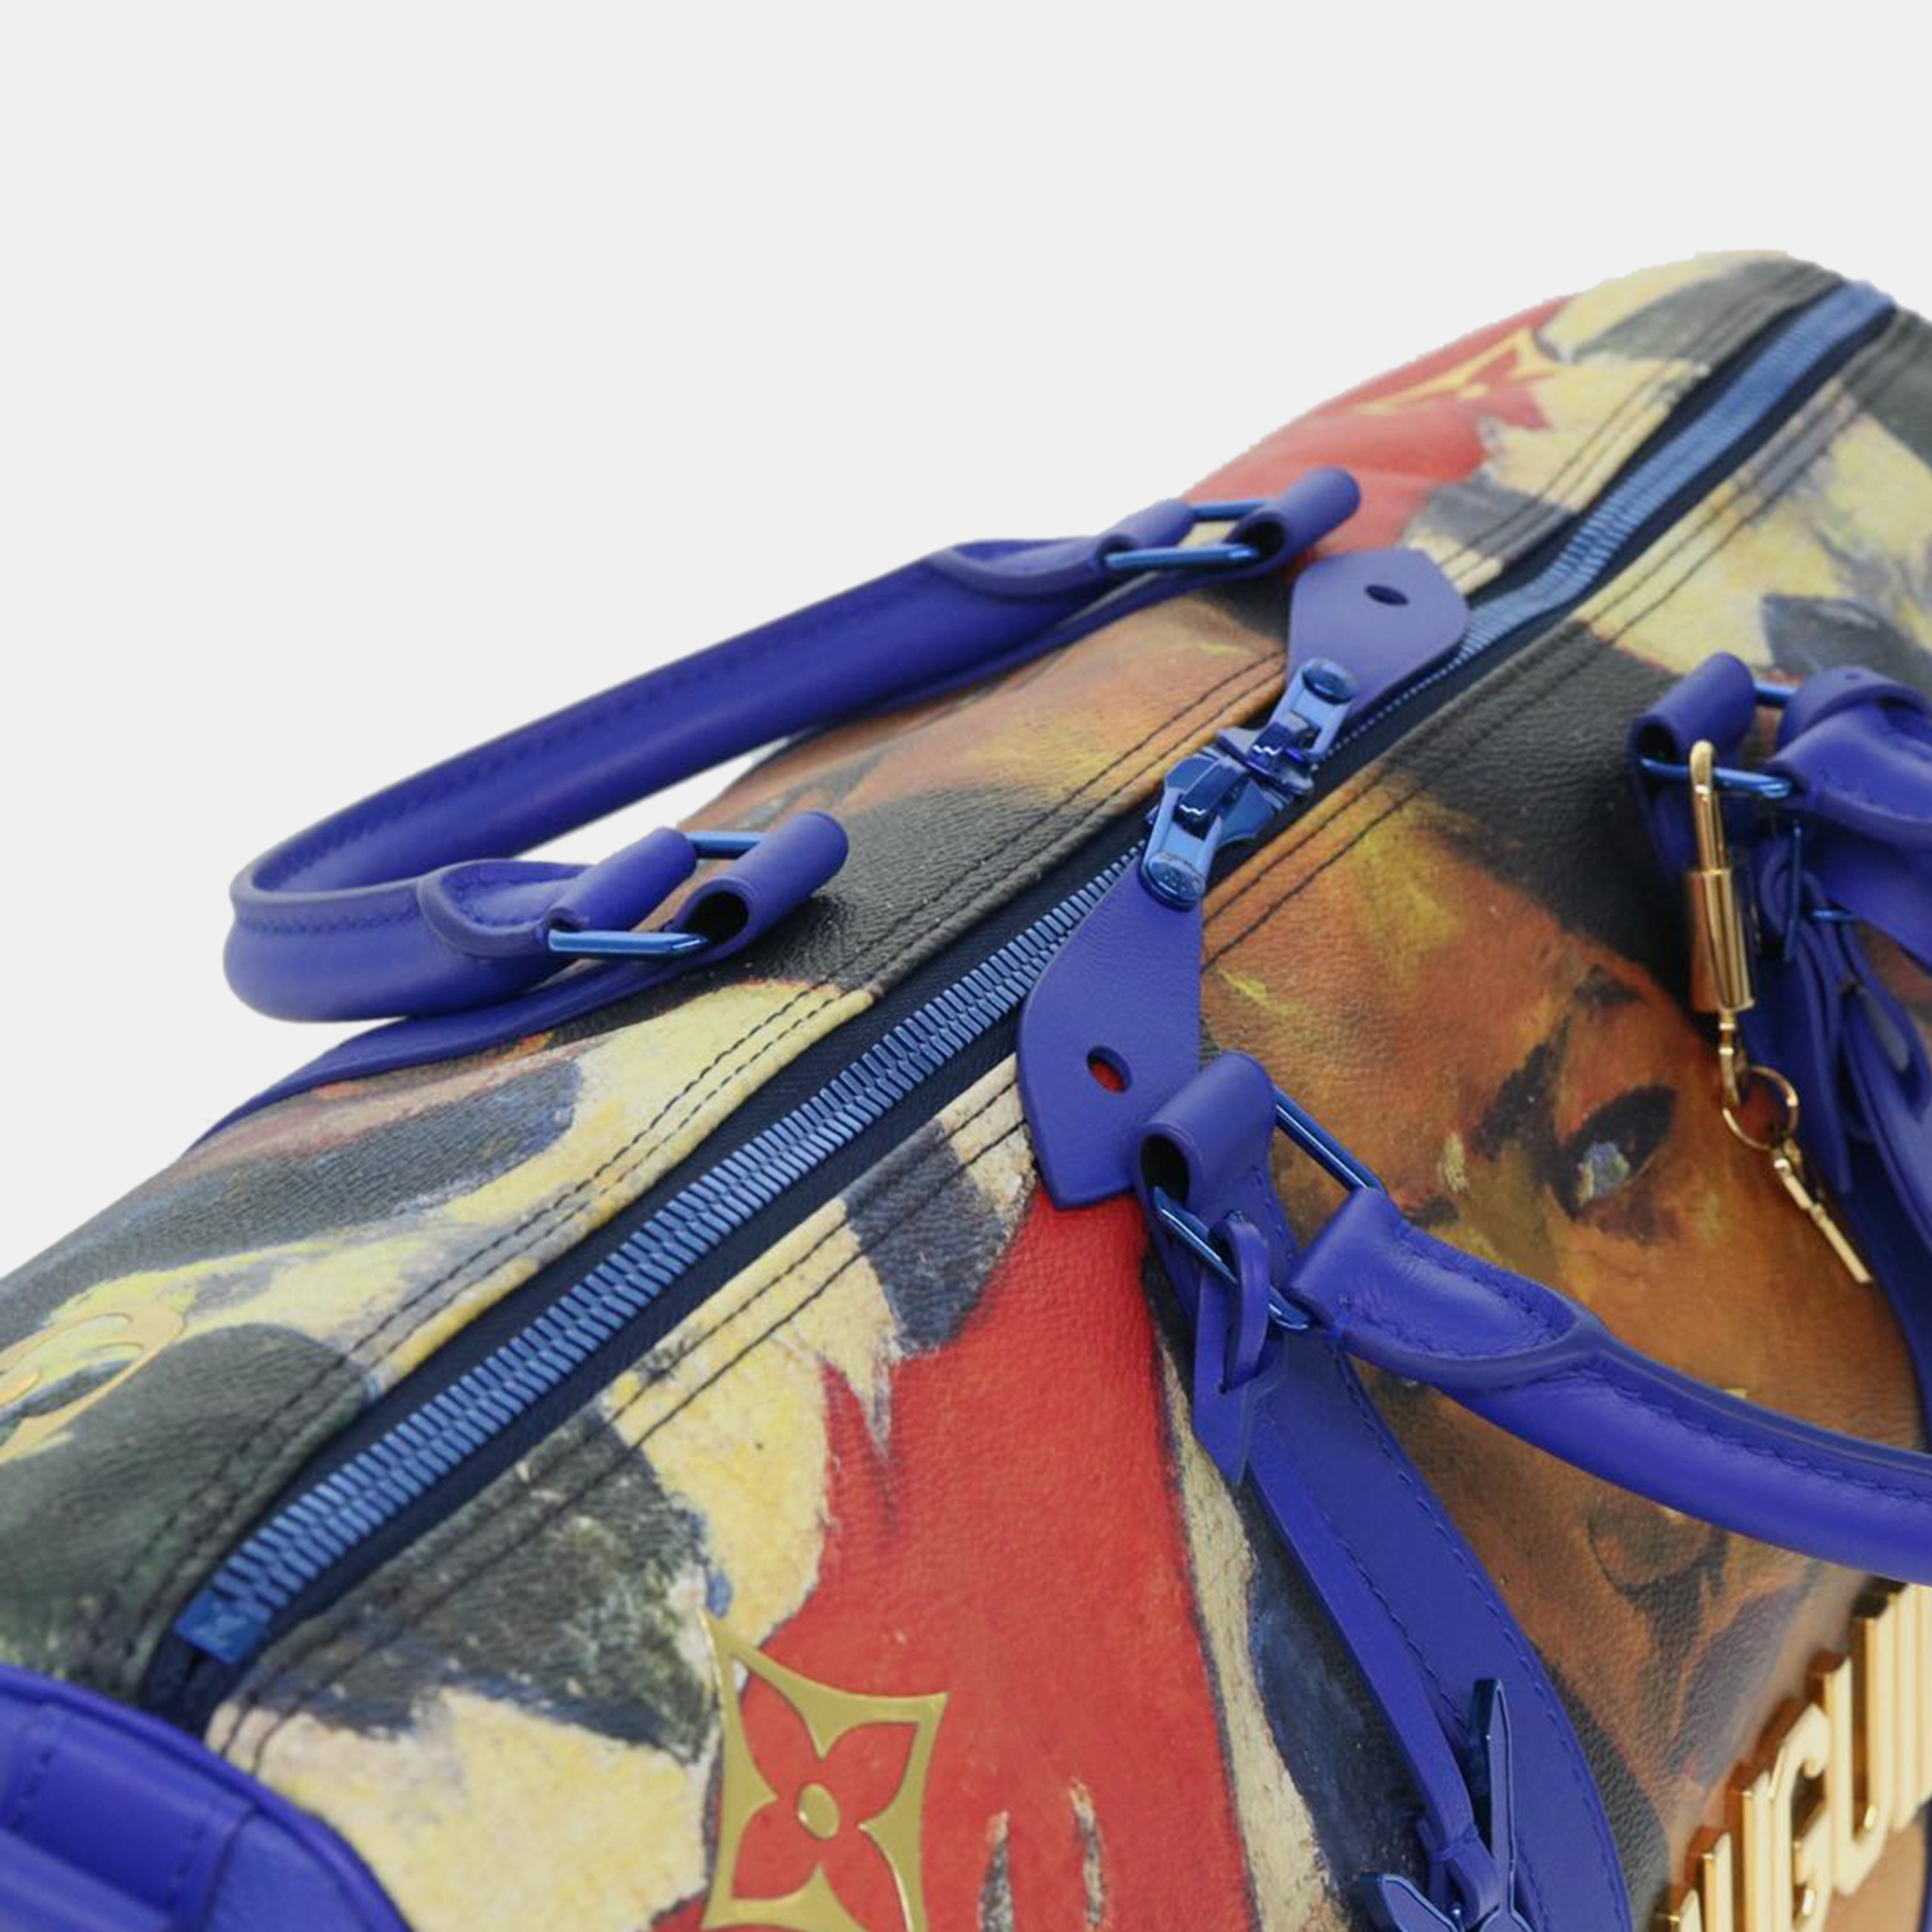 Louis Vuitton X Jeff Koons Master Collection Gauguin Keepall Bag